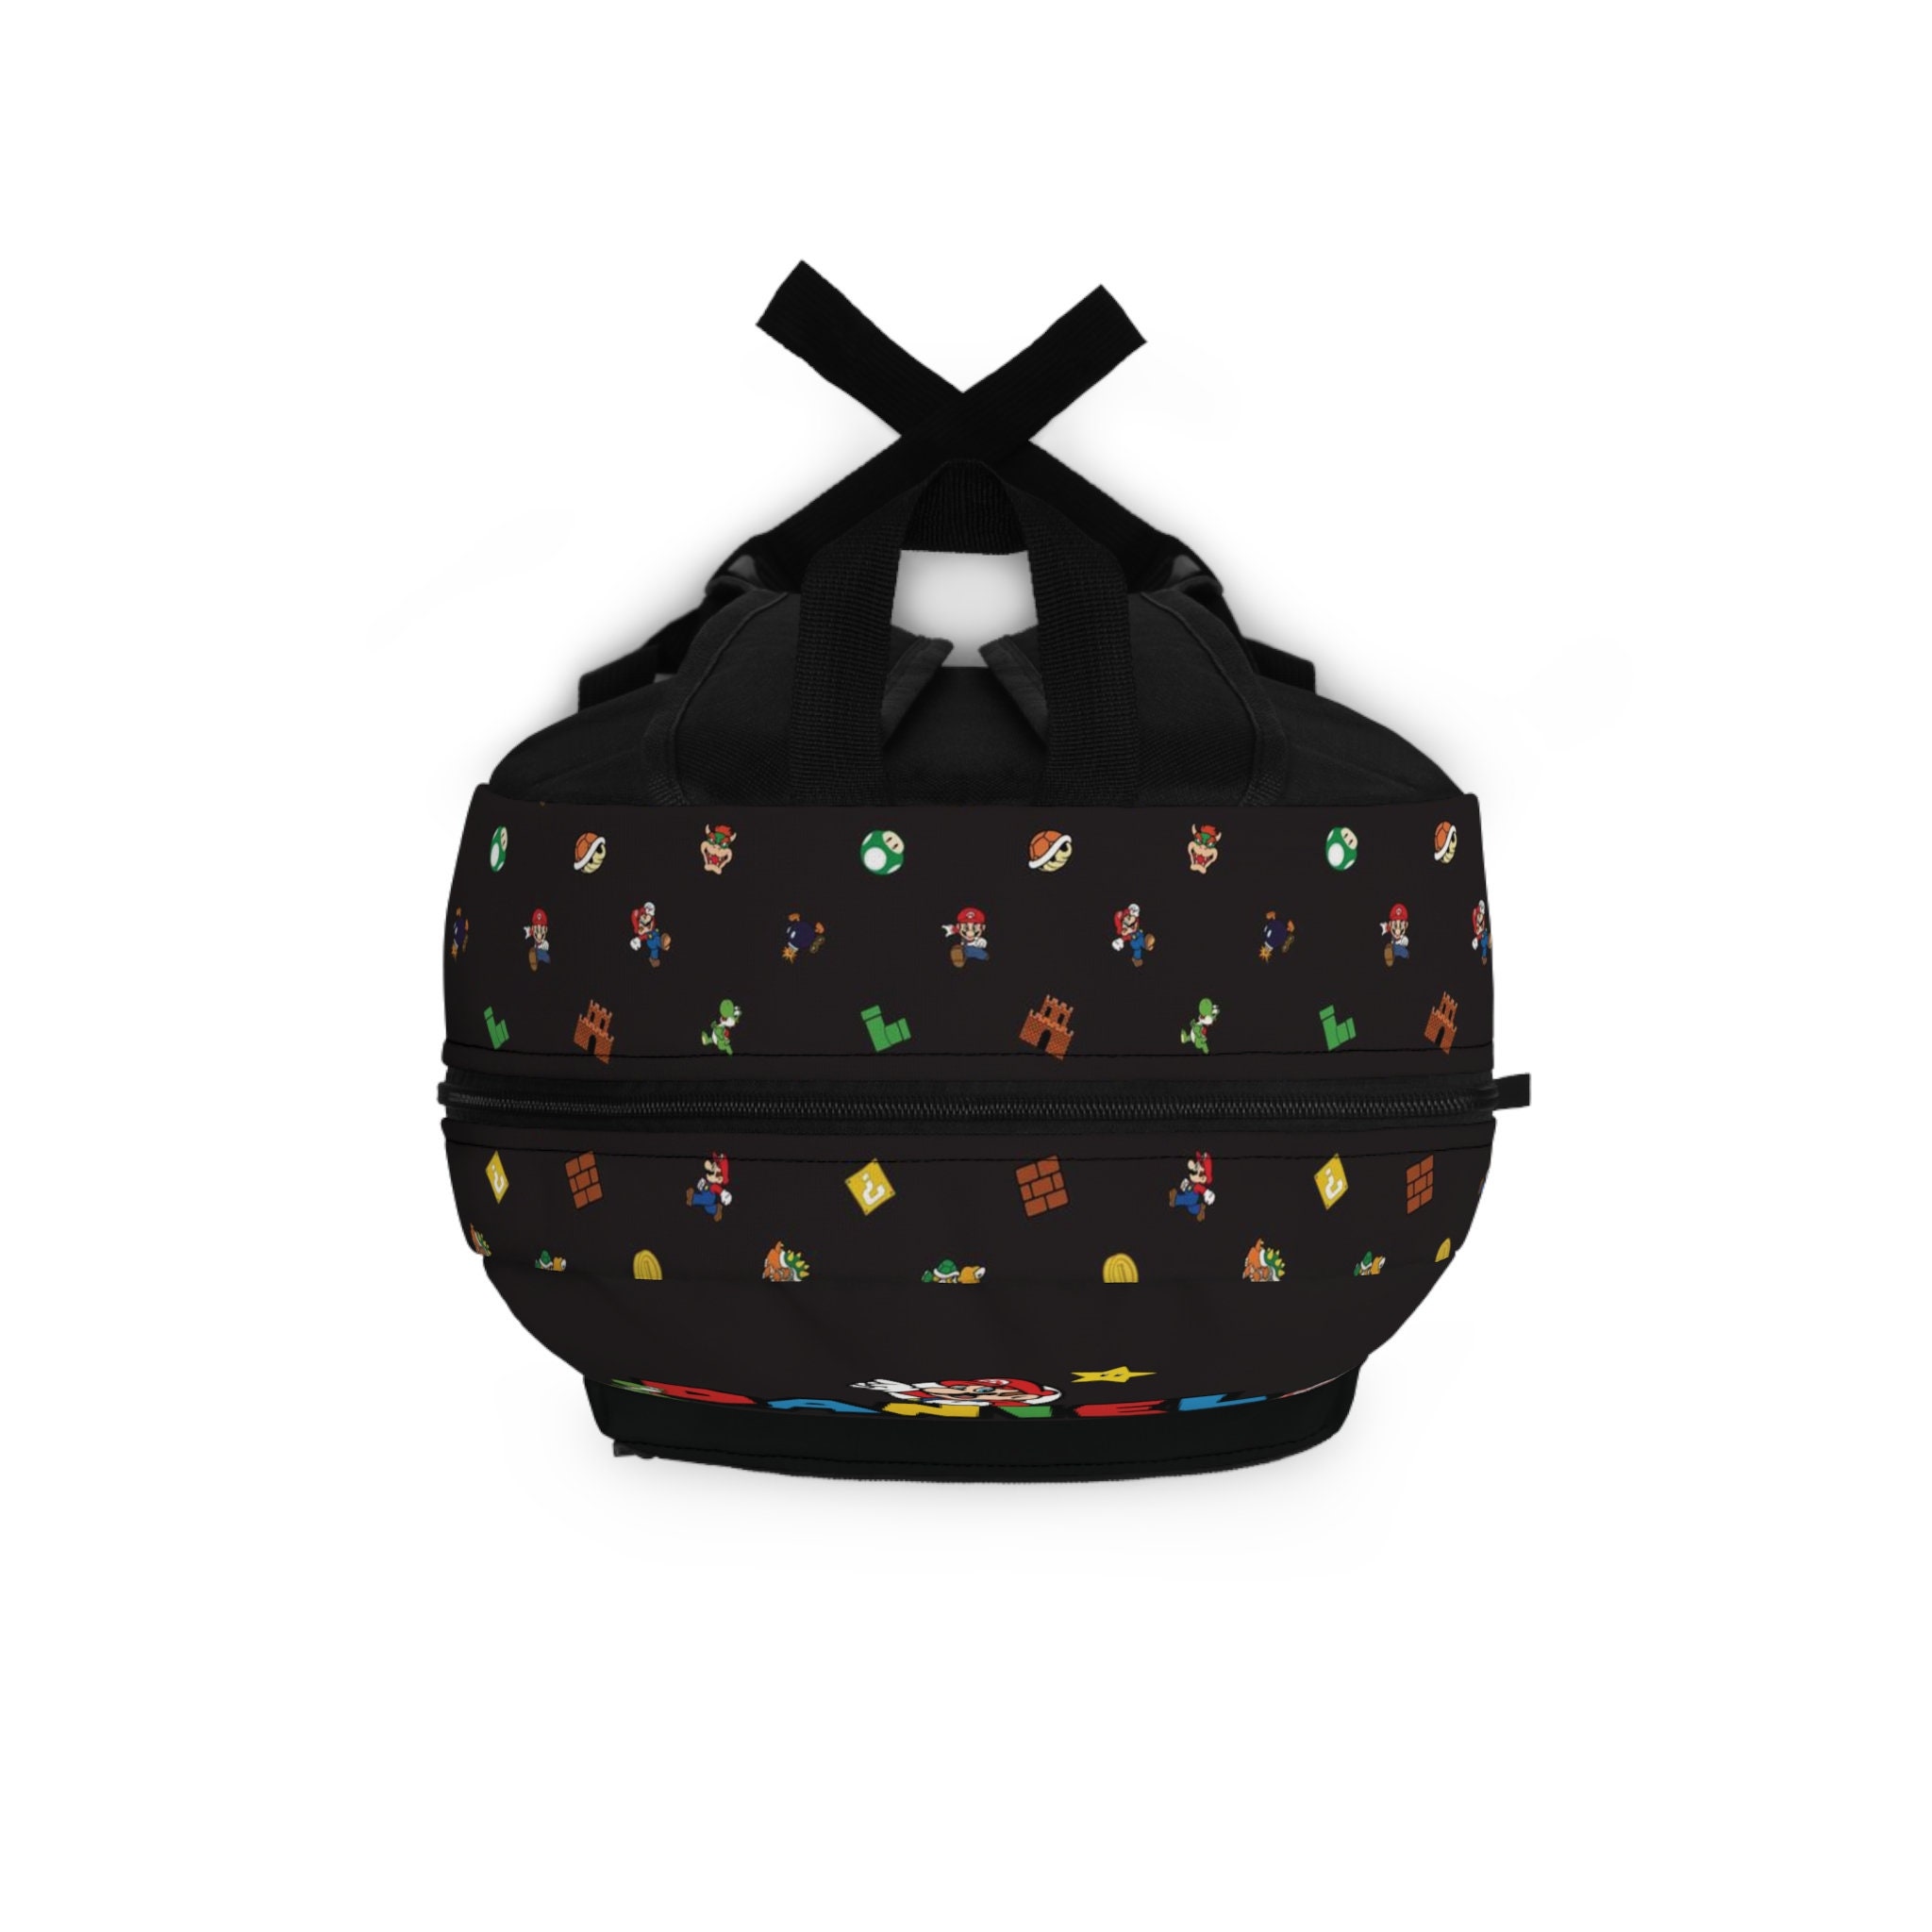 Custom Kids Backpack, Super Mario backpacks